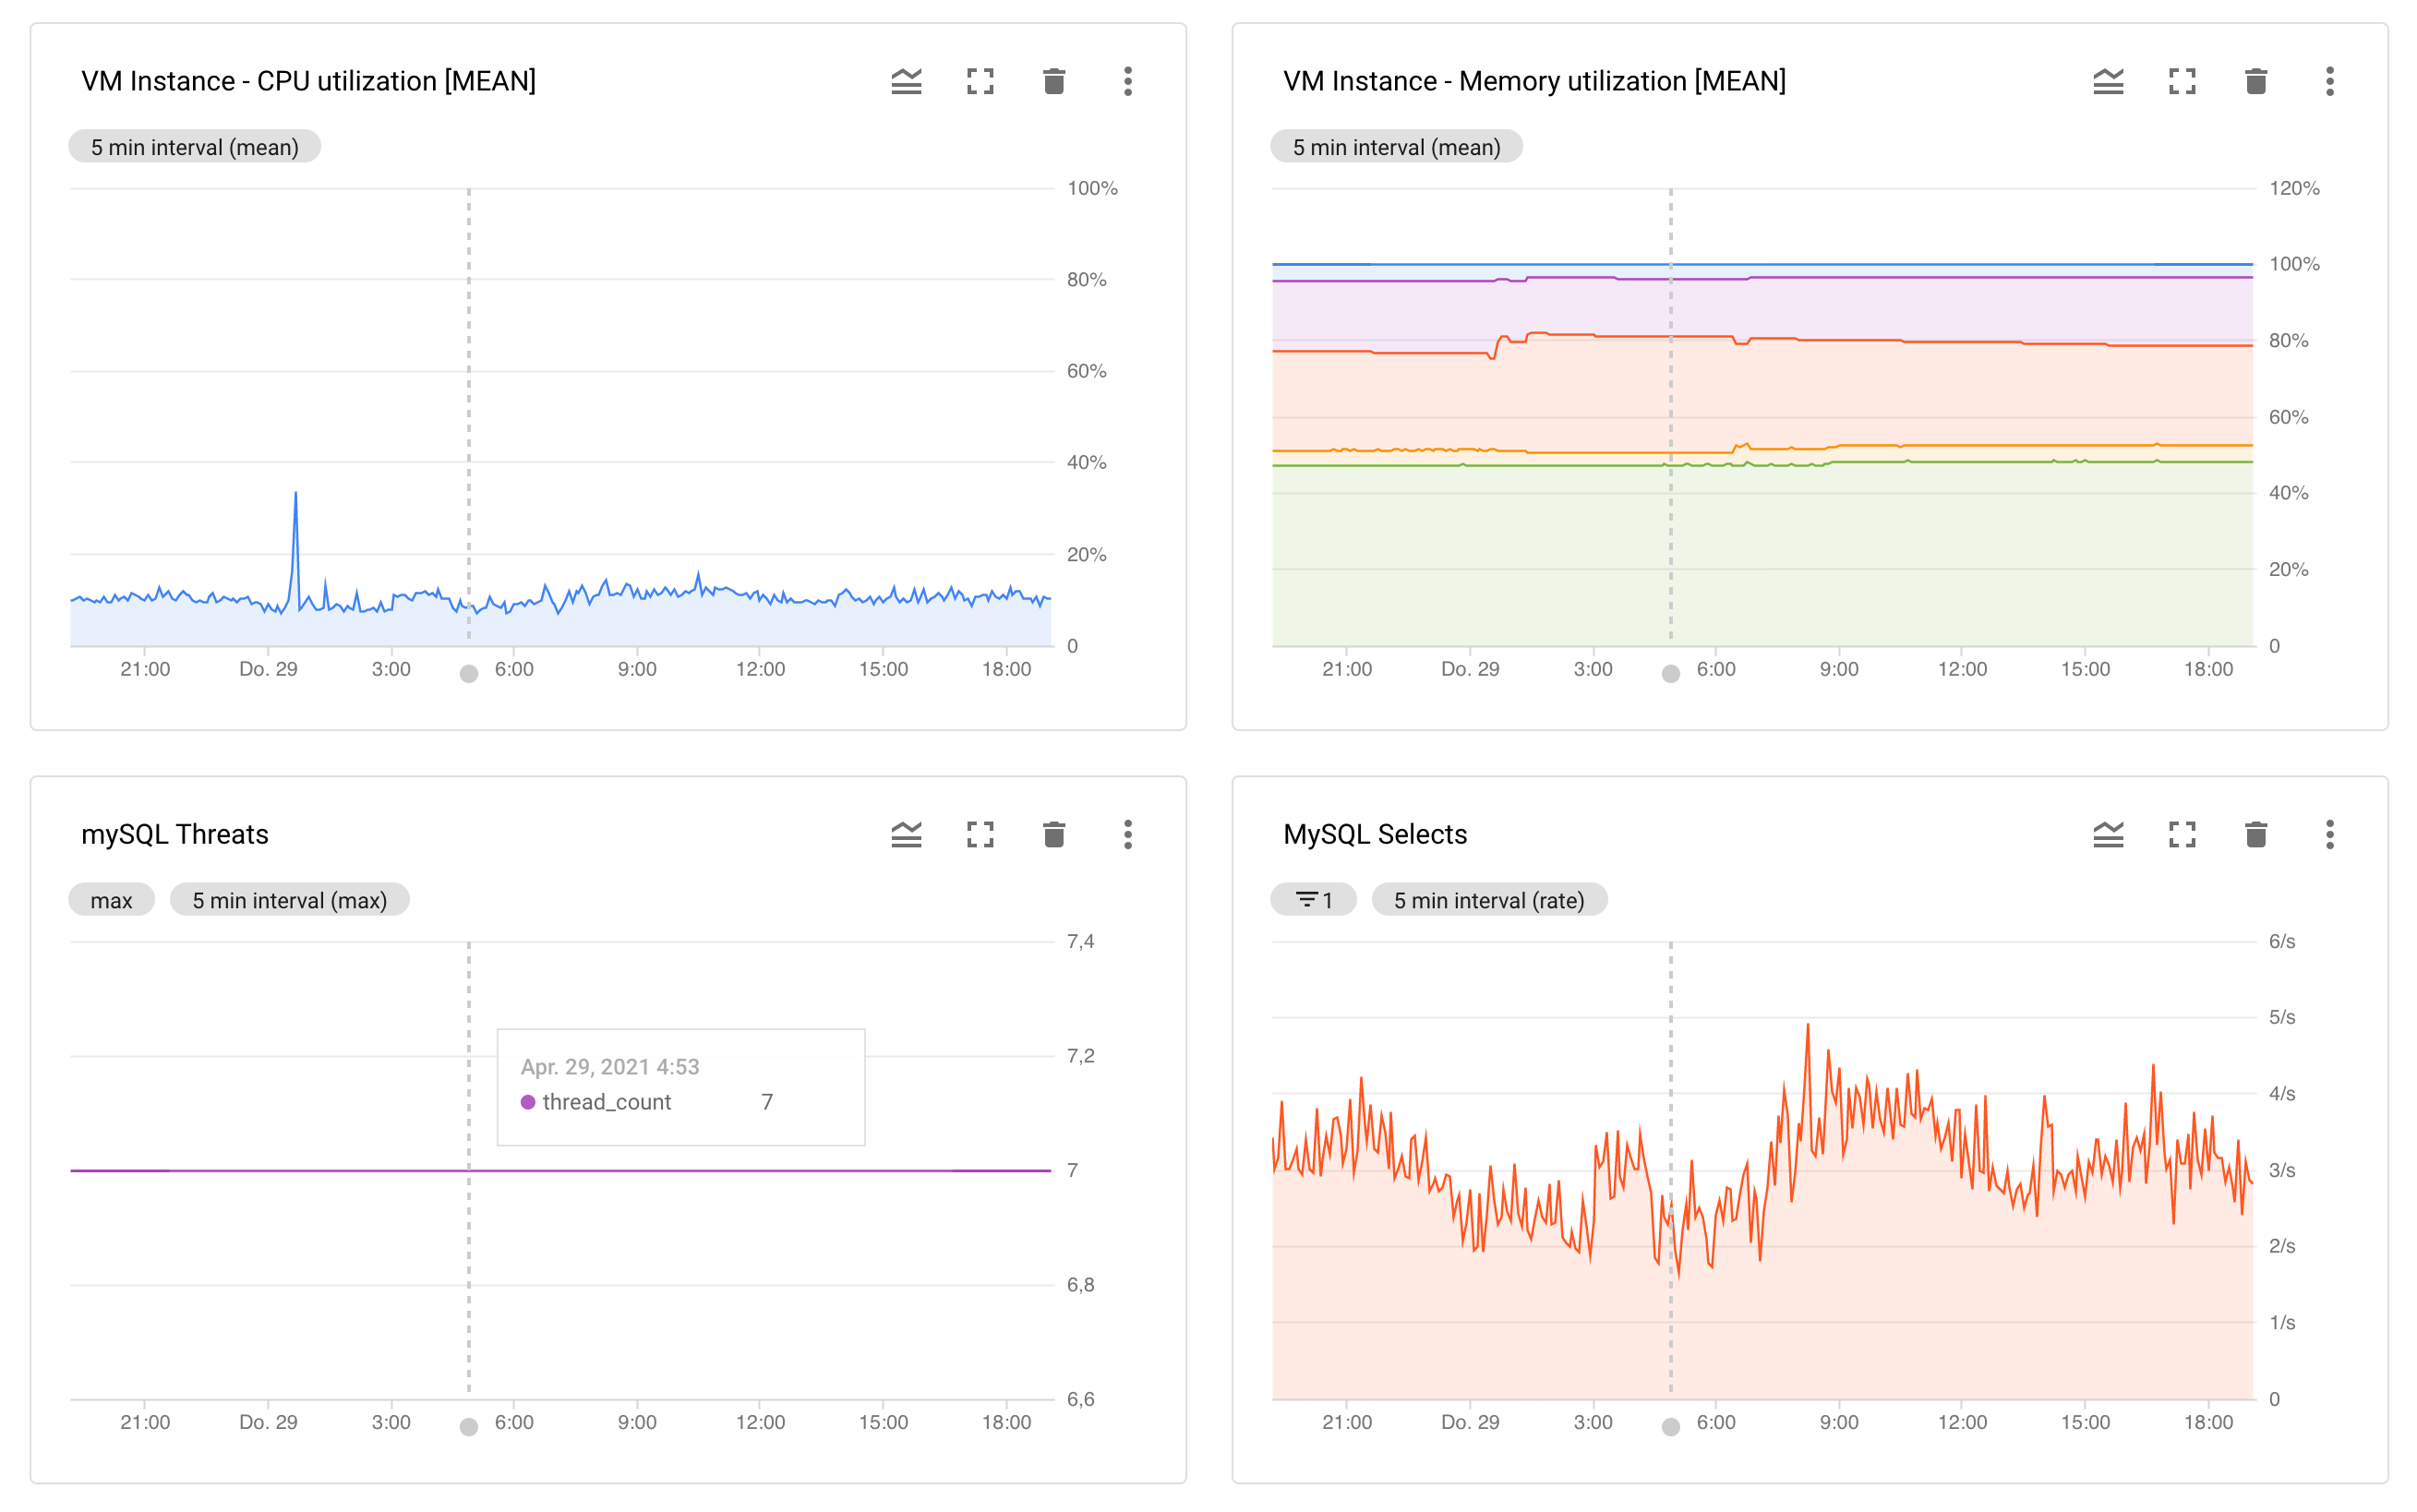 Google Cloud Monitoring